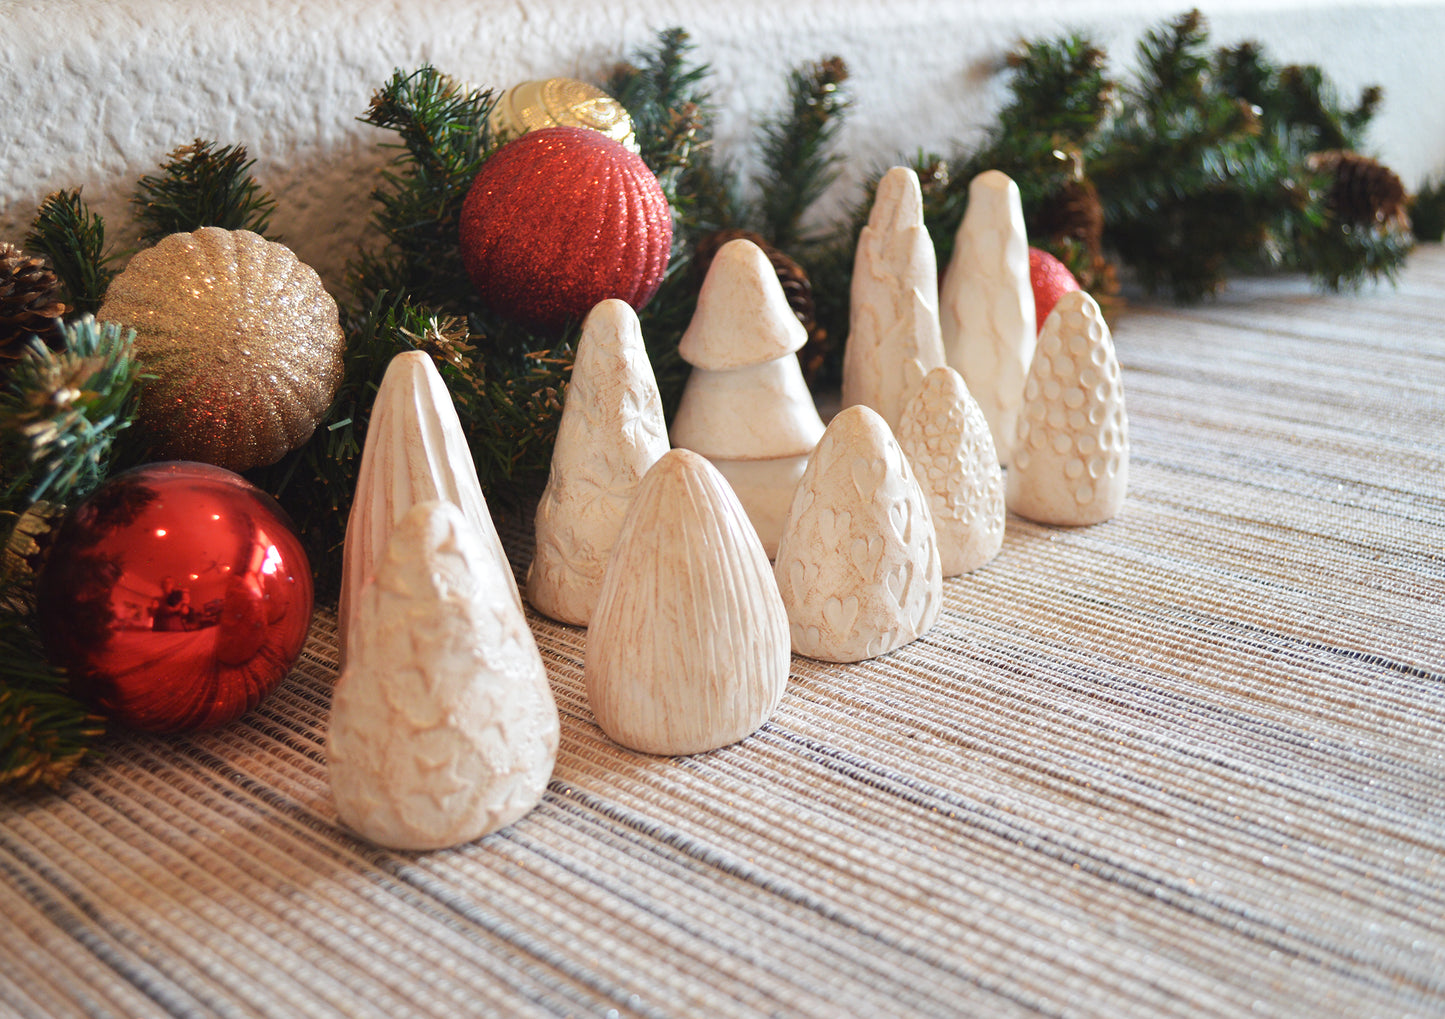 Set of 10 mini Christmas trees / terrarium desk bookshelf decor / gift for family friends / small abstract clay Xmas trees decoration